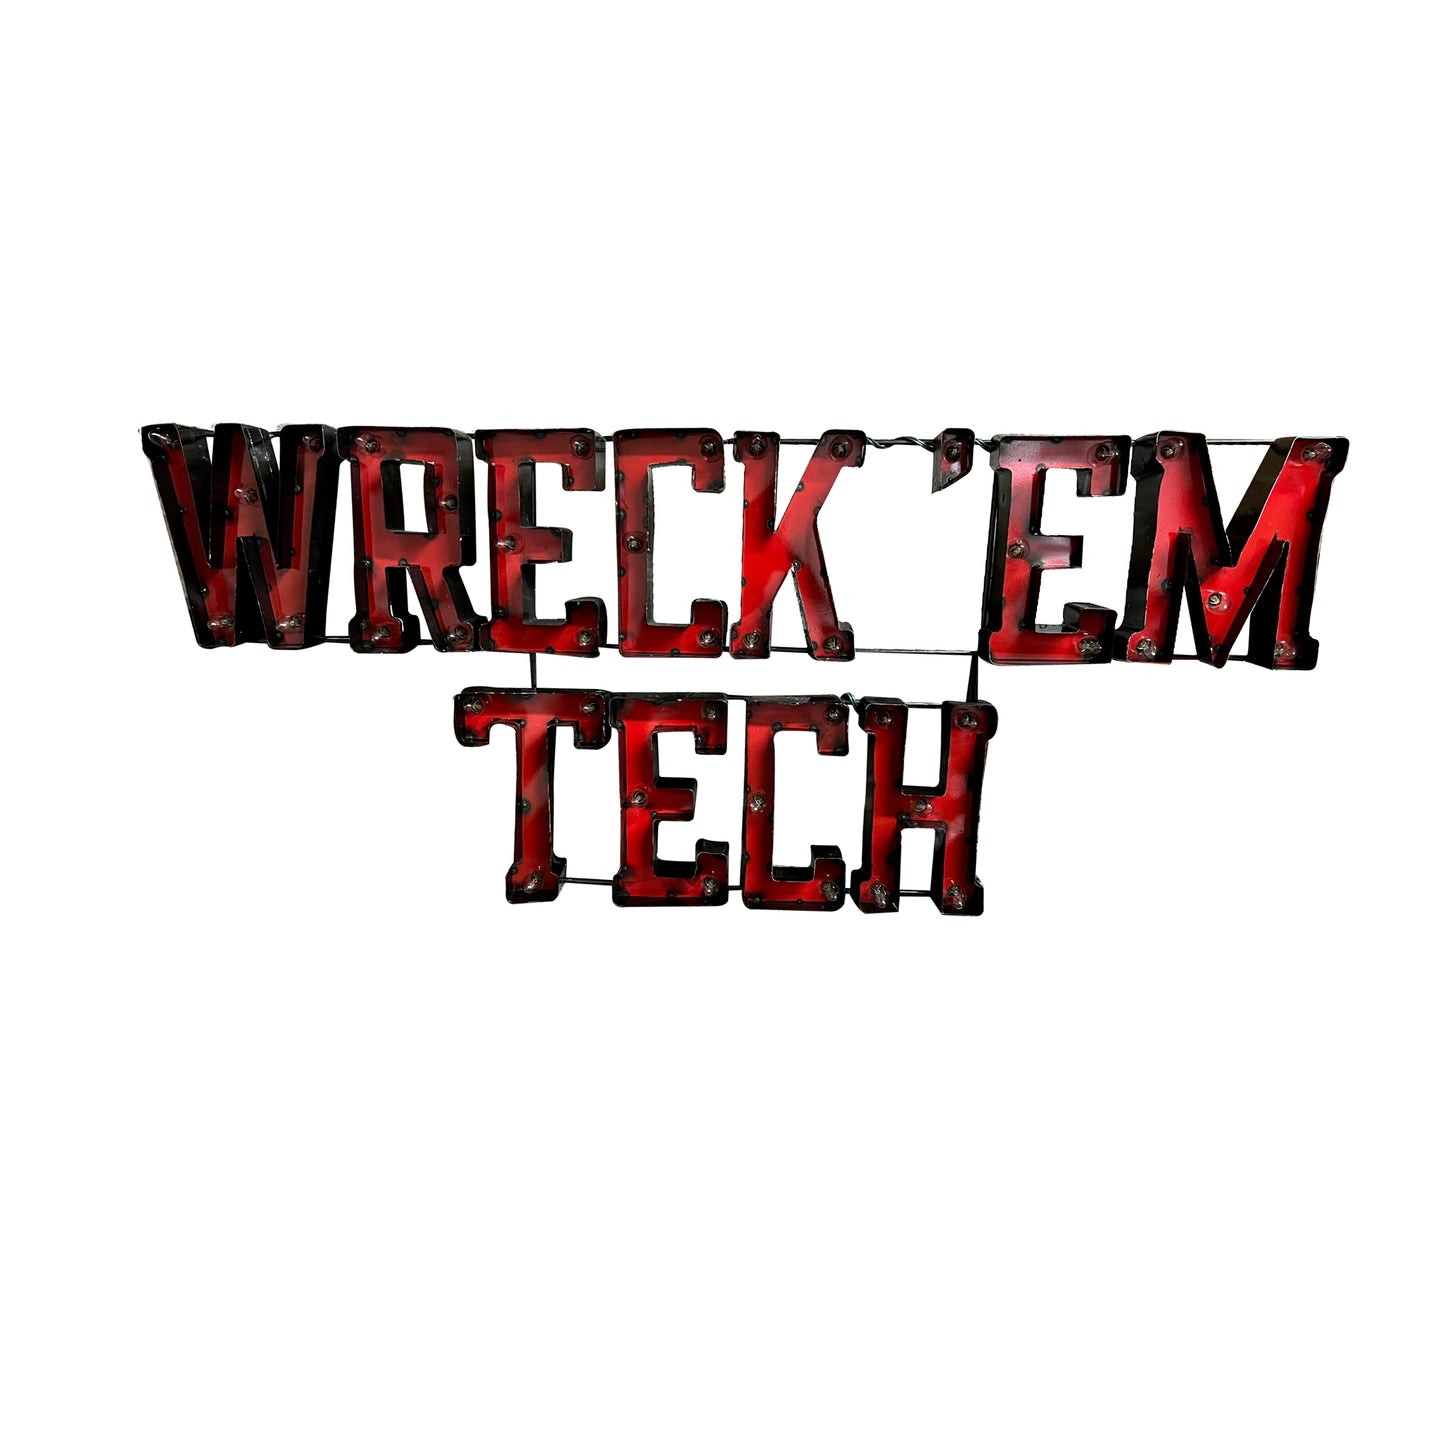 Texas Tech University "Wreck 'em Tech" Lighted Recycled Metal Wall Decor